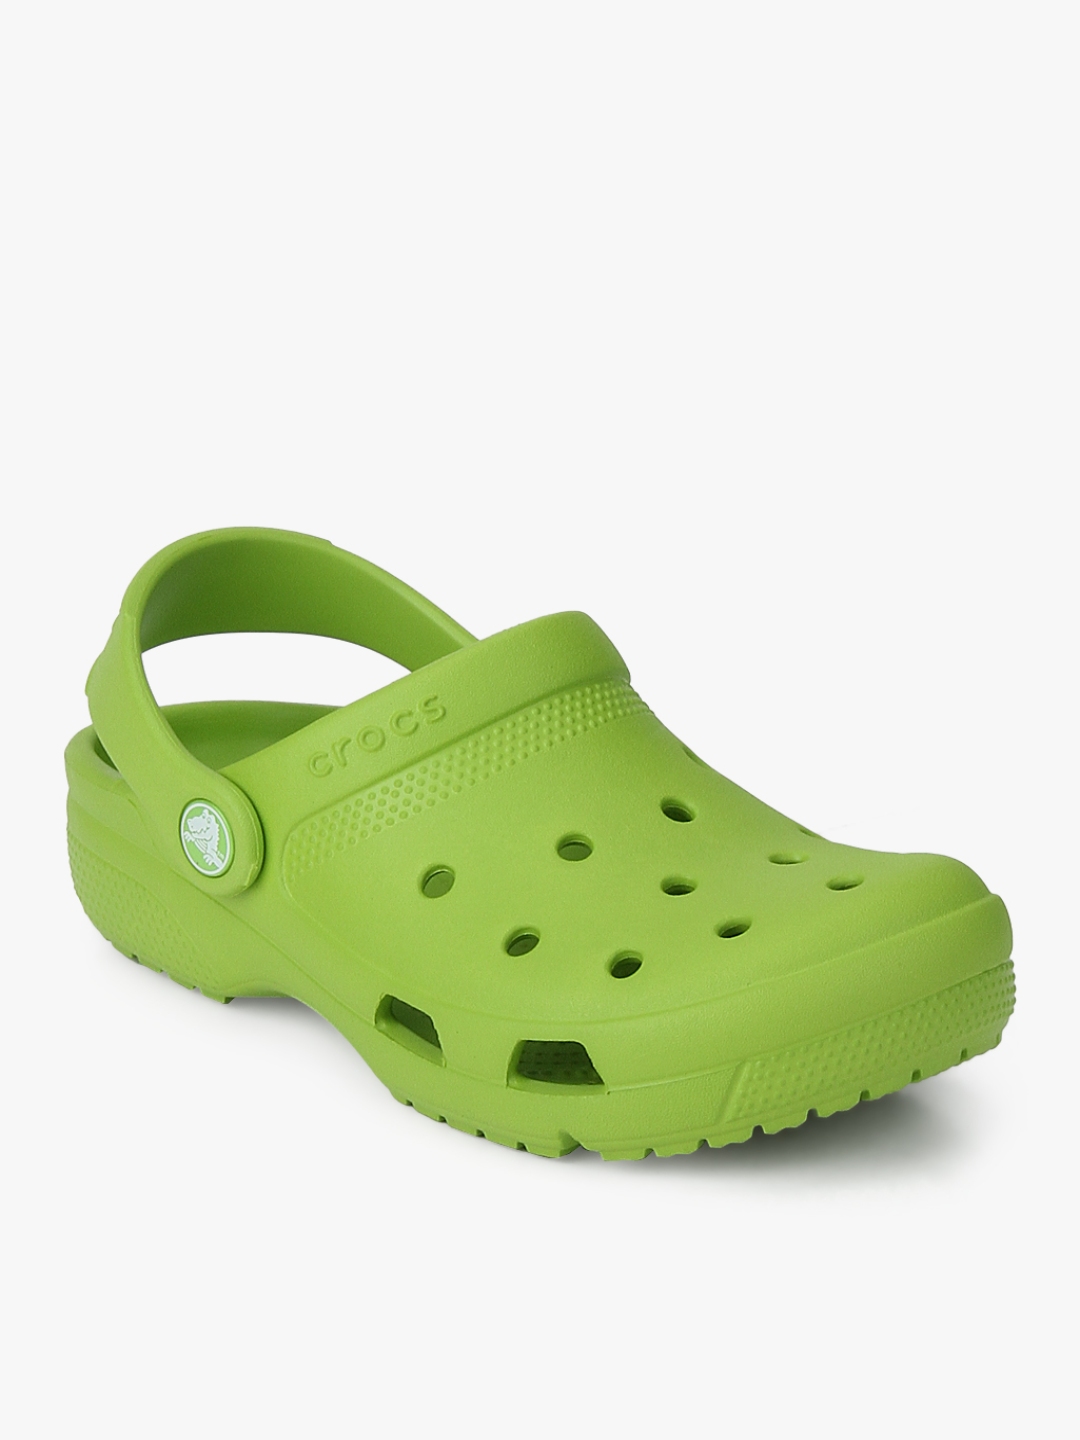 crocs shoes myntra